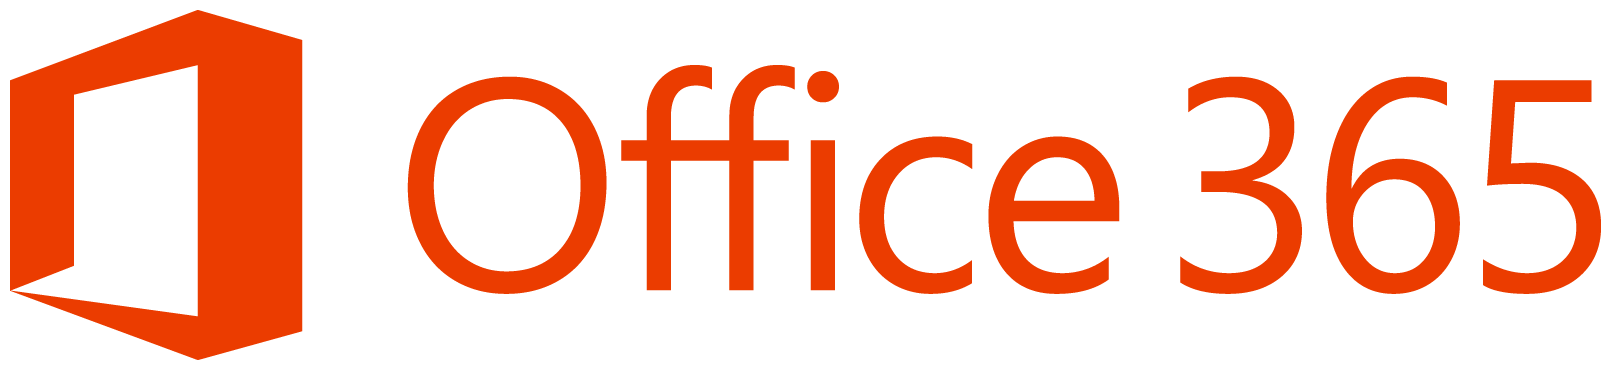 Microsoft Office 365 Logo - File:Office 365 logo.png - Wikimedia Commons